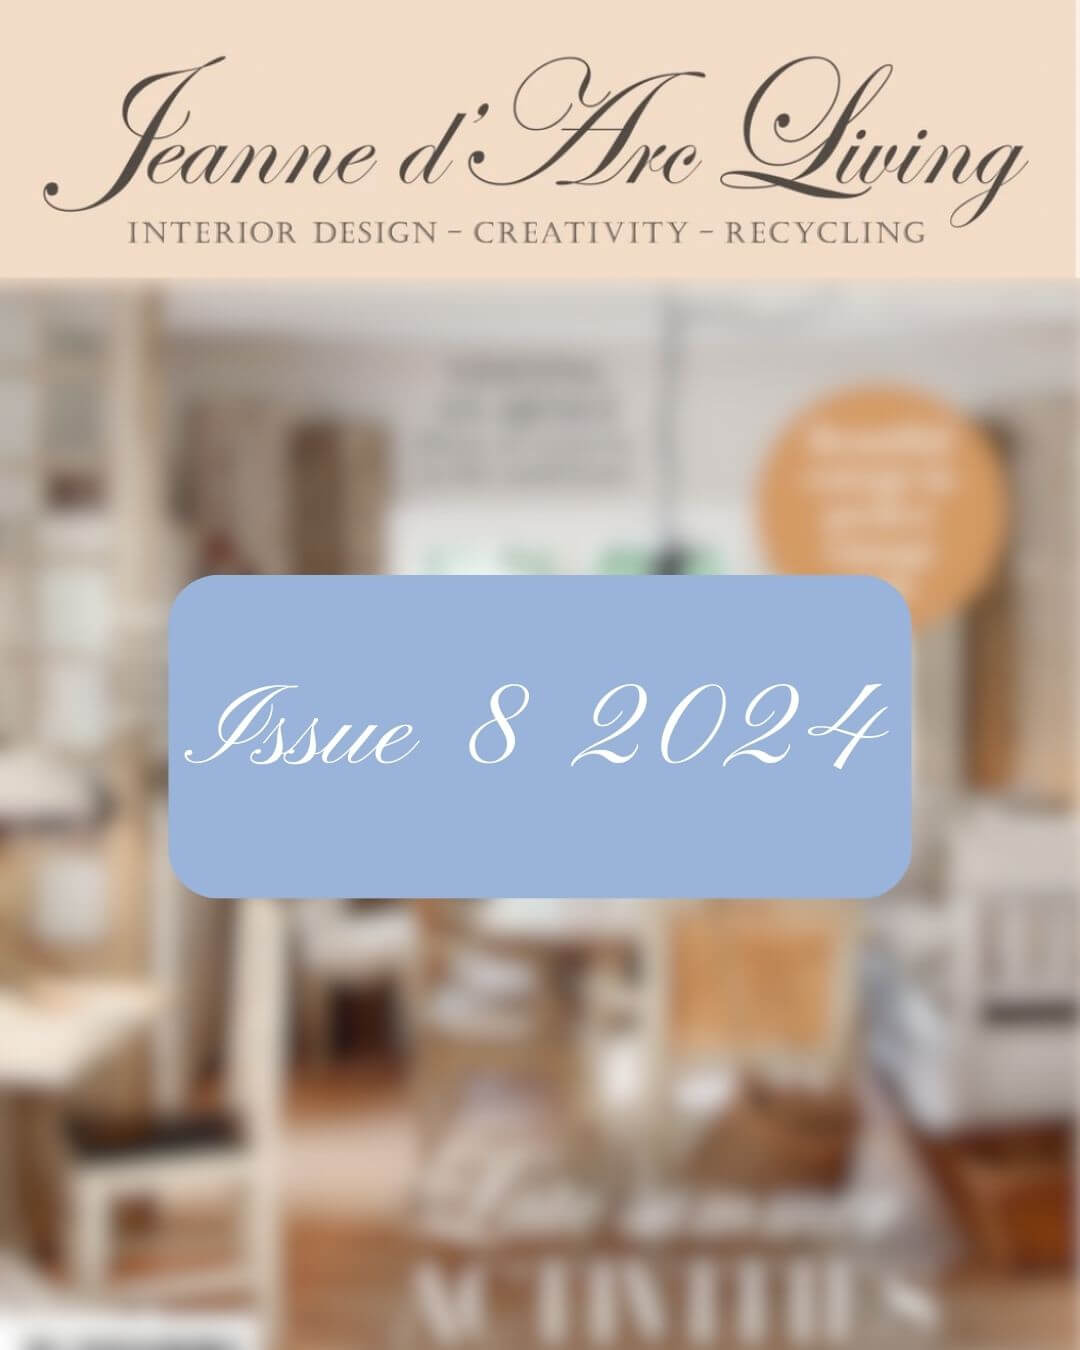 Jeanne d'Arc Living Magazine Issue 8 2024 - Blake & Taylor Chalk Furniture Paint